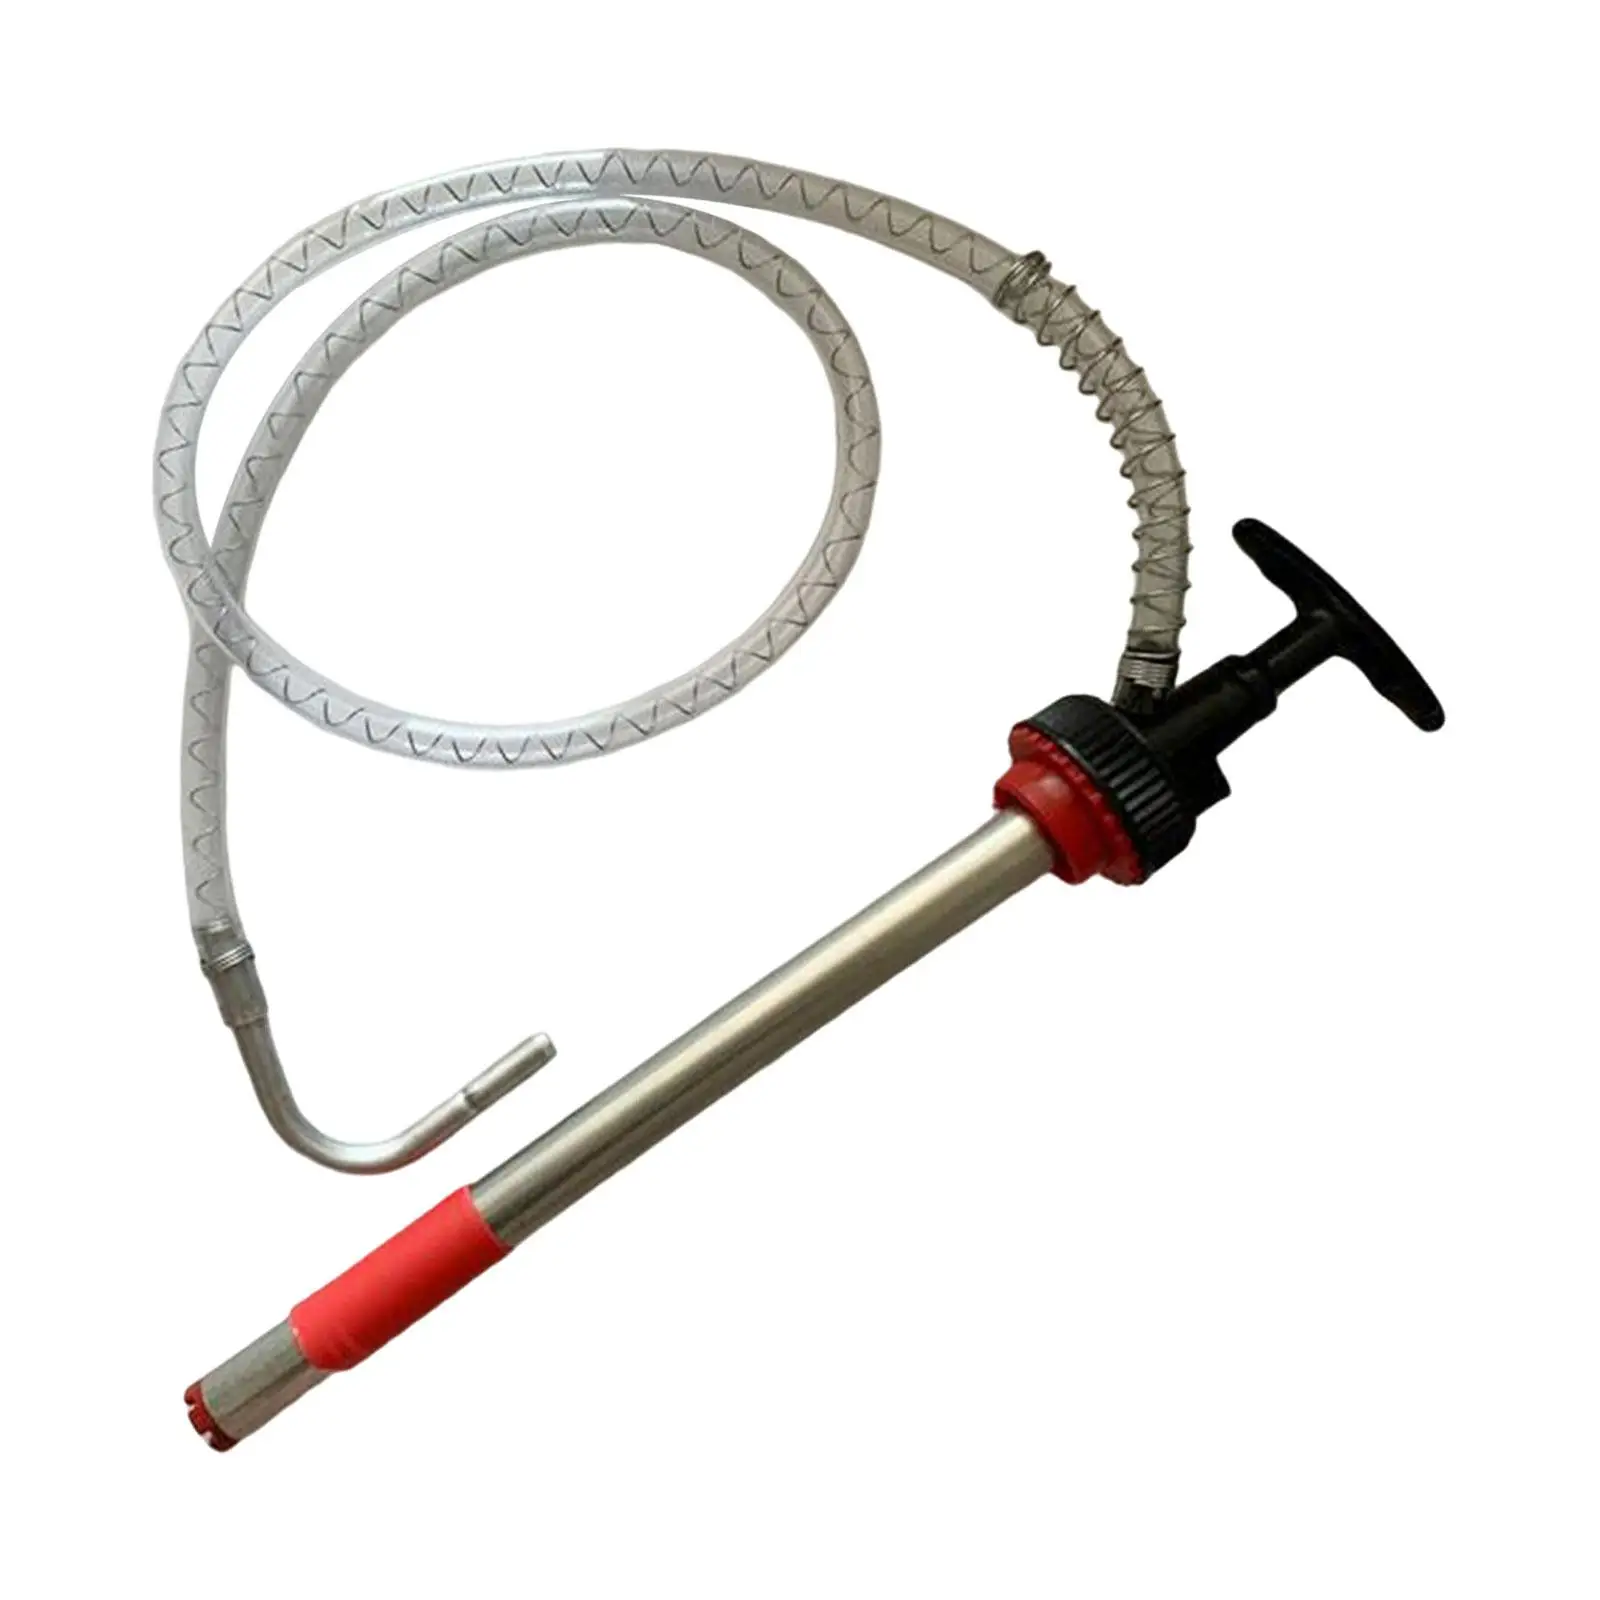 Automotive Handy Fluid Pump Gear Oil Pump Fluid Oil Change Tool Portable for Differential Fluid Professional Labor Saving